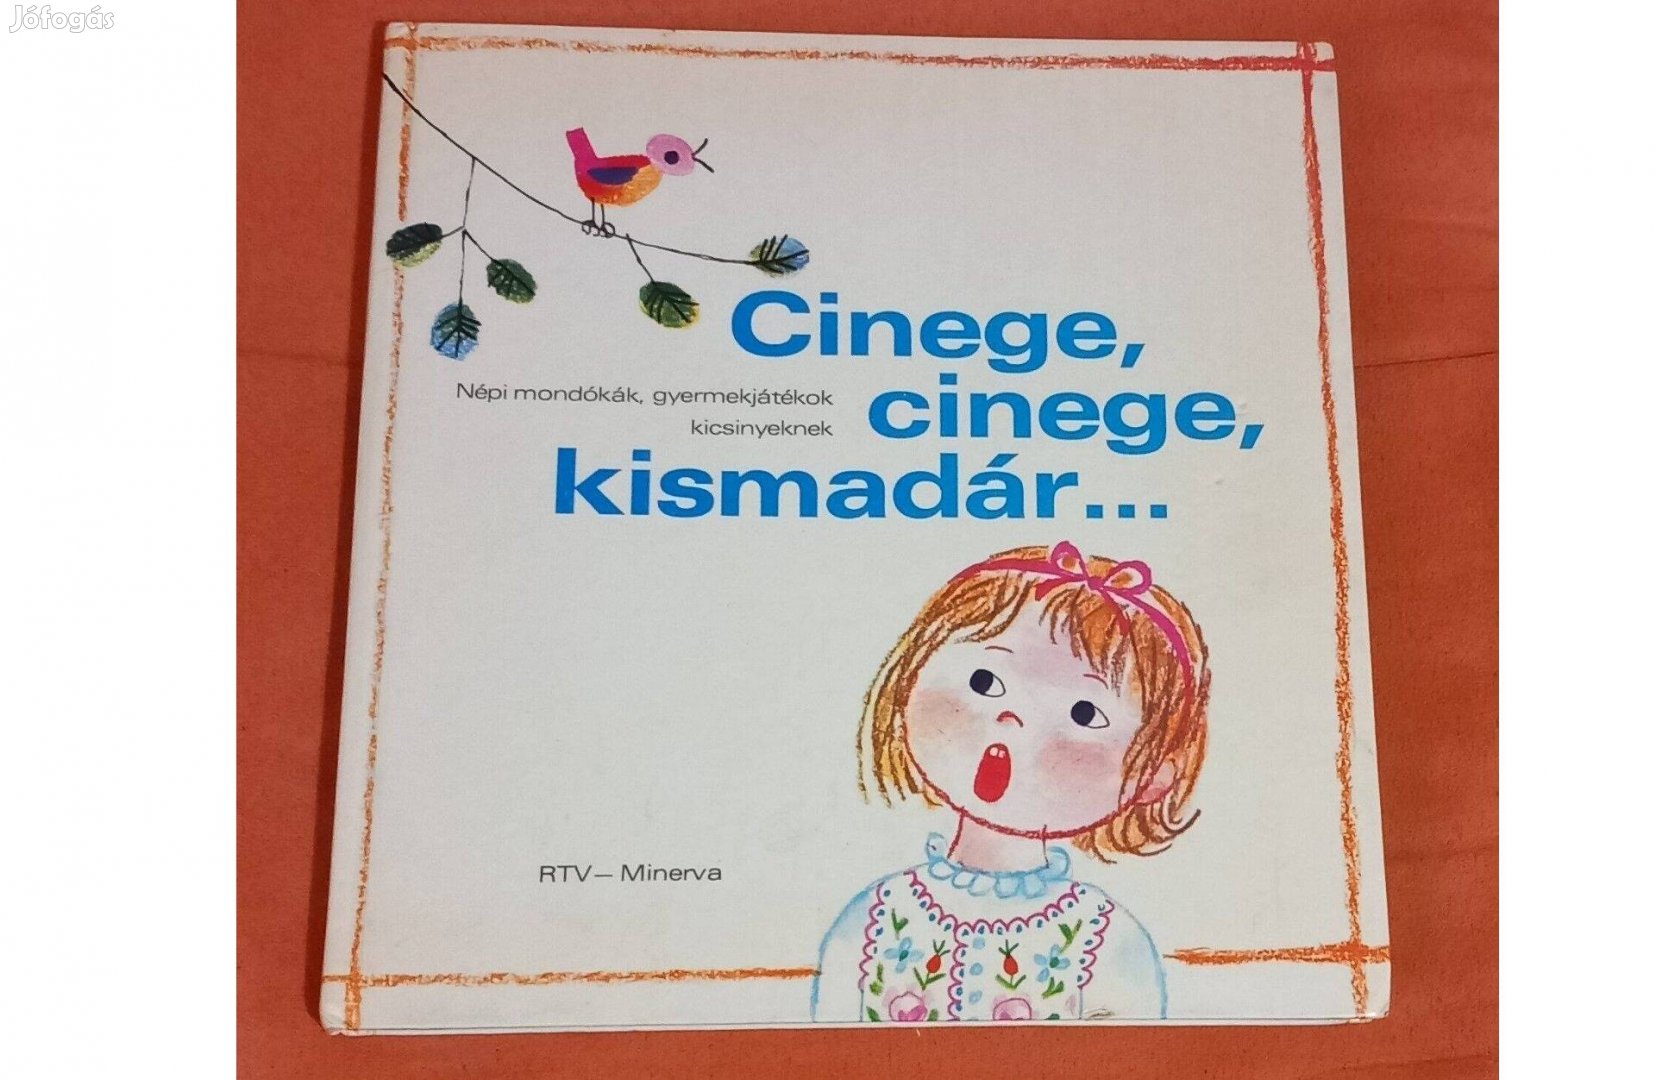 Borsai Ilona - Kovács Ágnes: Cinege, cinege, kismadár, könyv ovisoknak